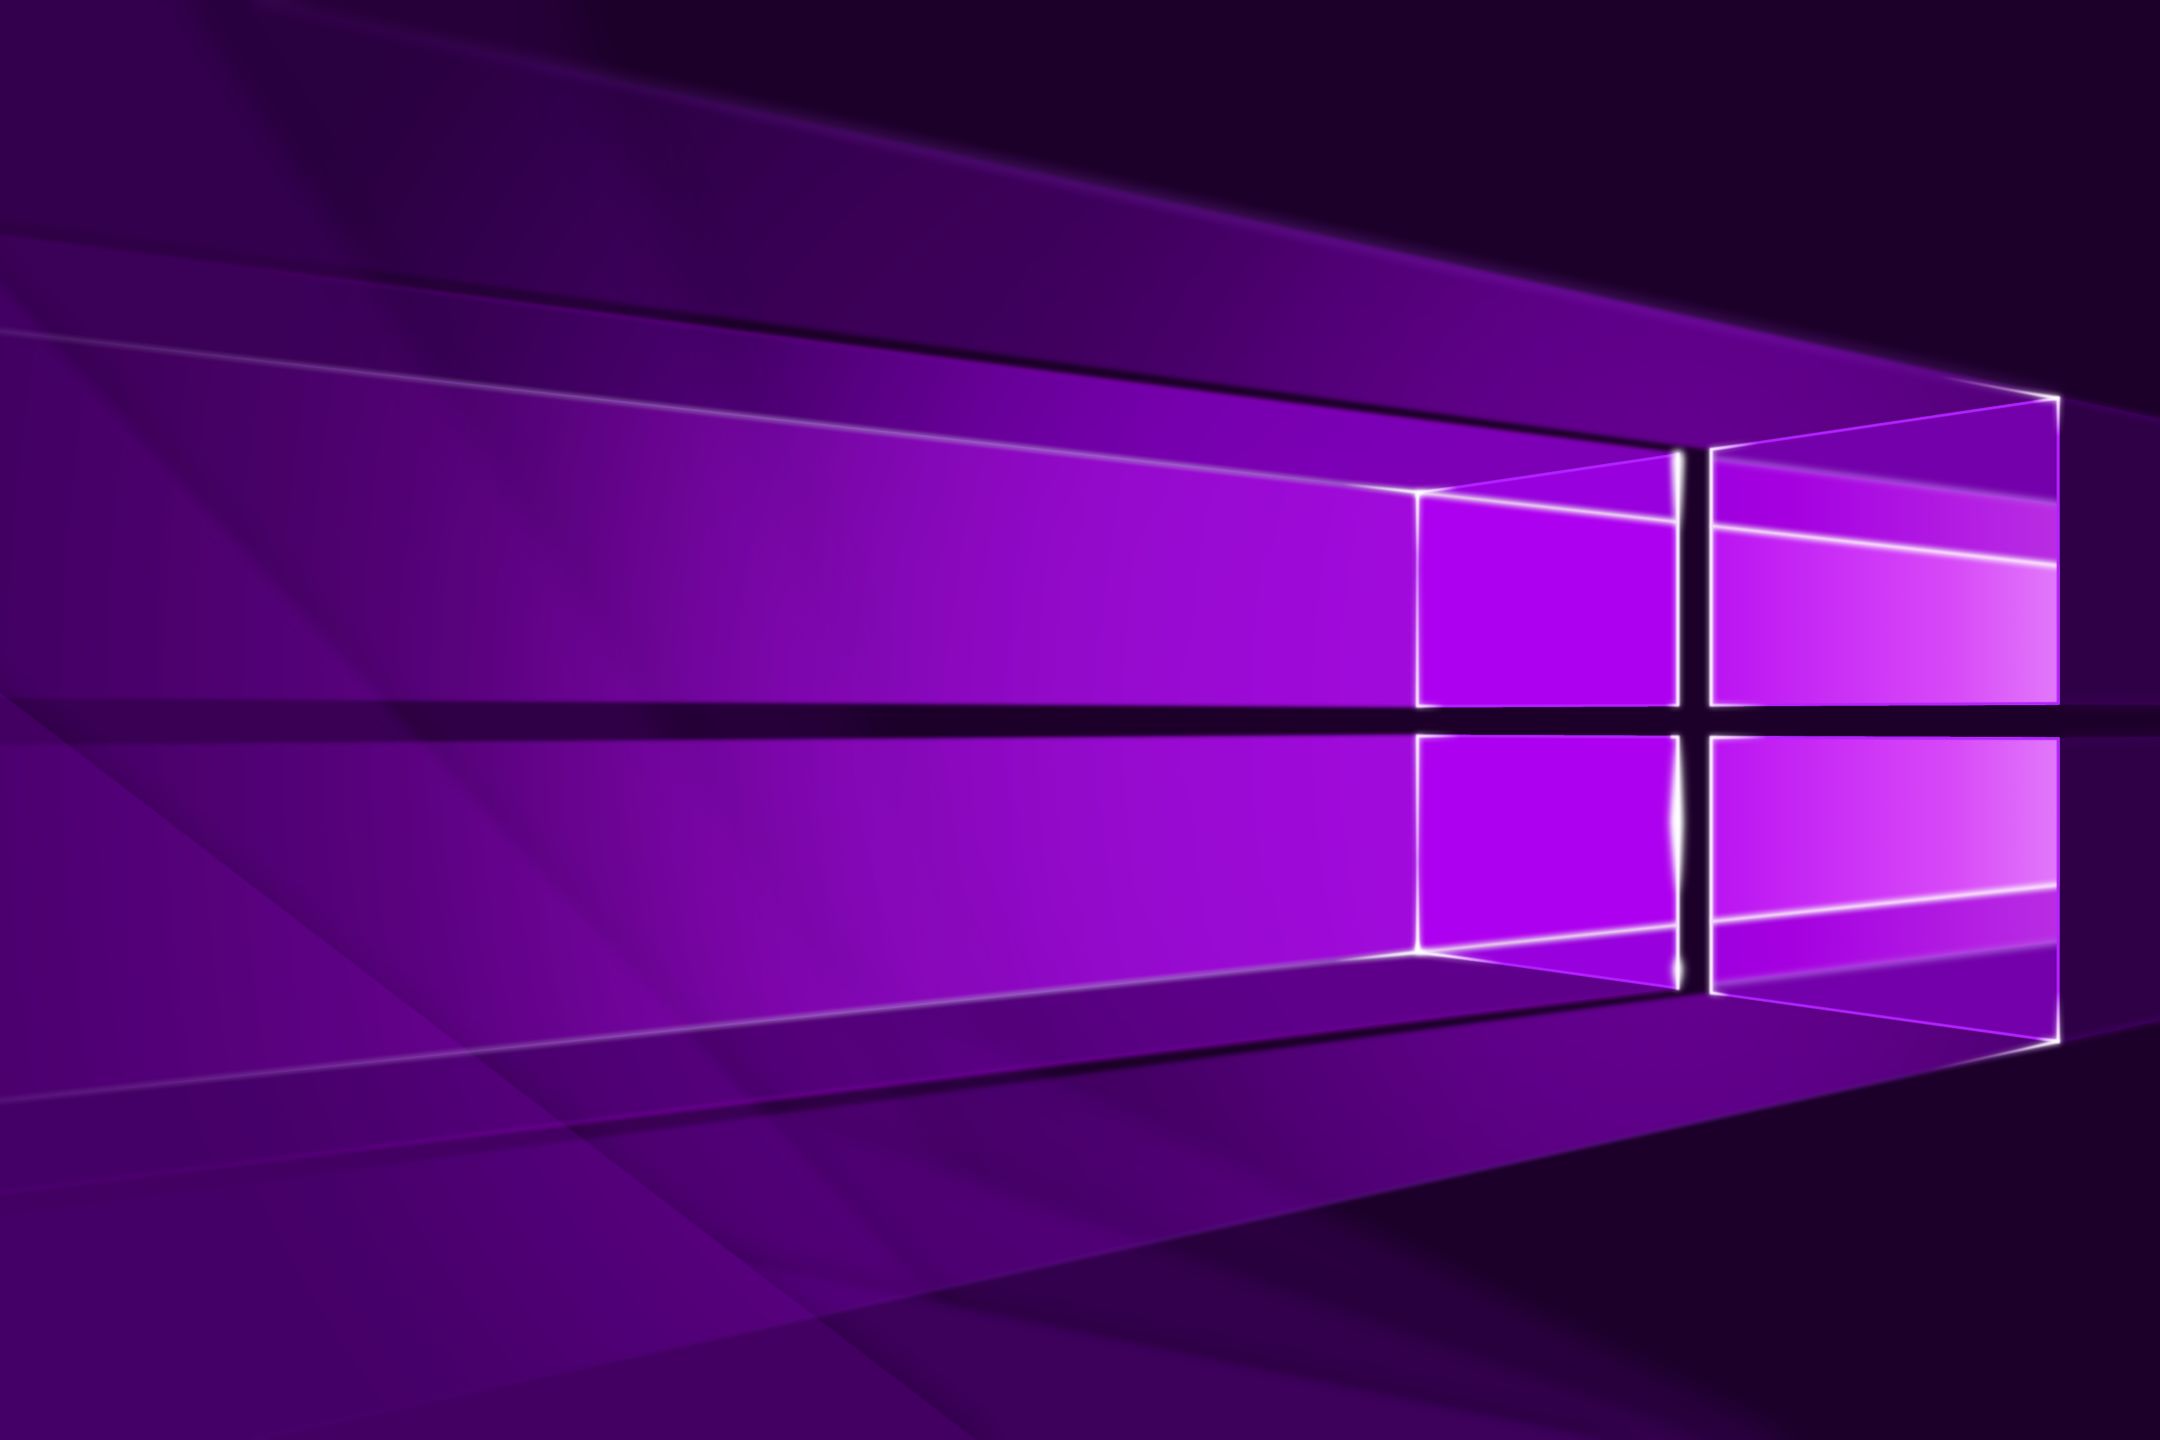 operating system, windows 10, technology, purple, windows